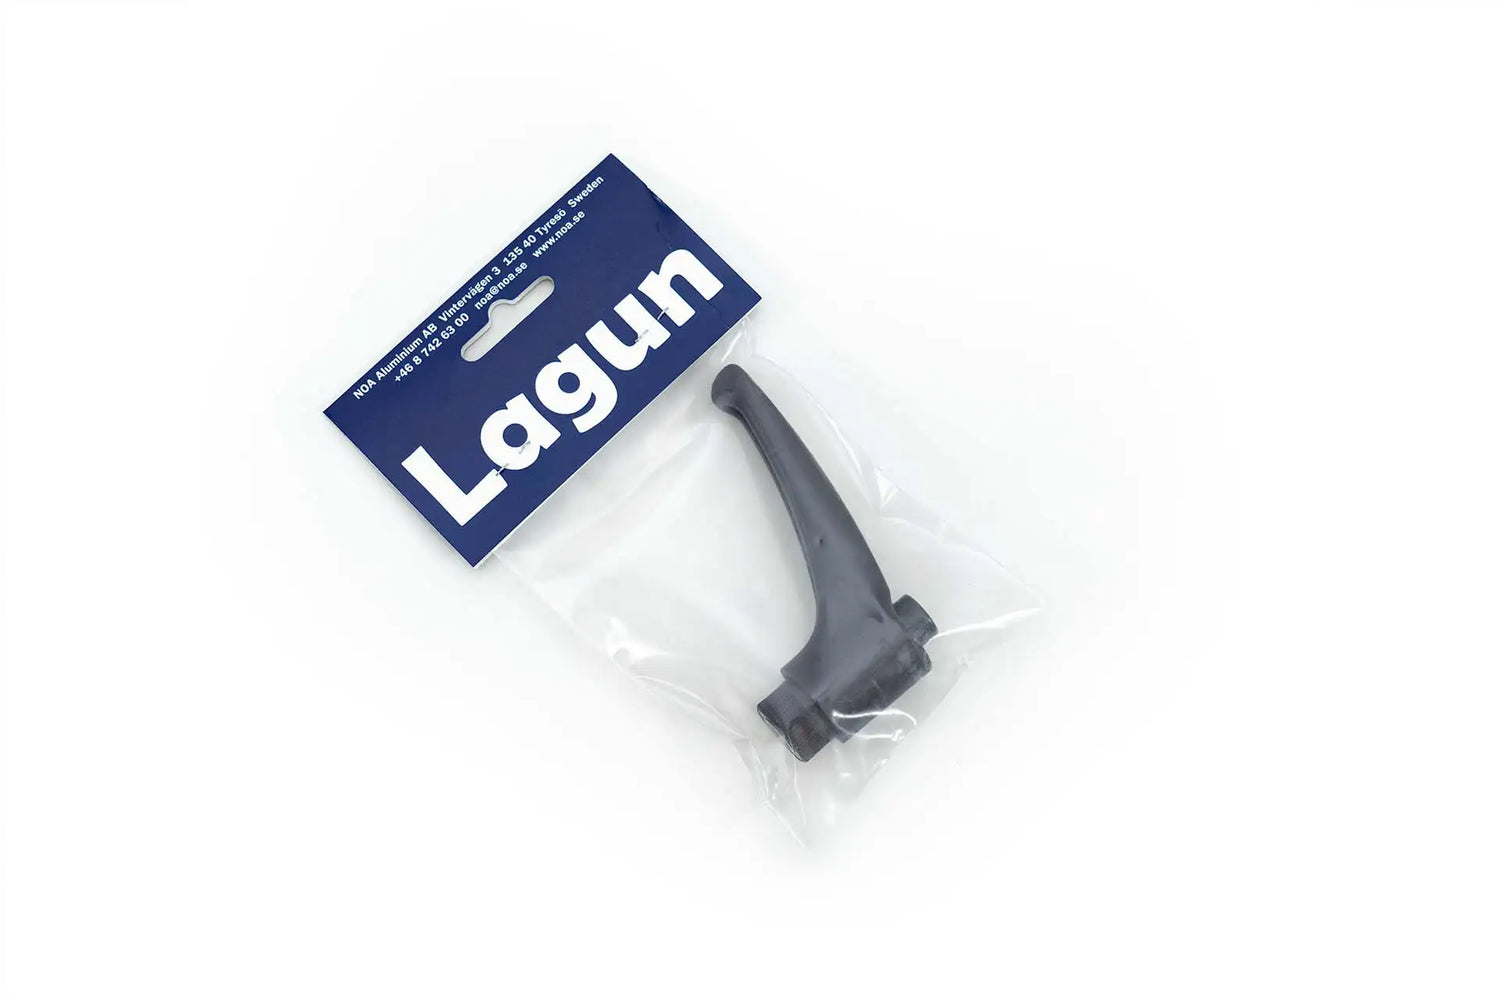 Lagun replacement handle